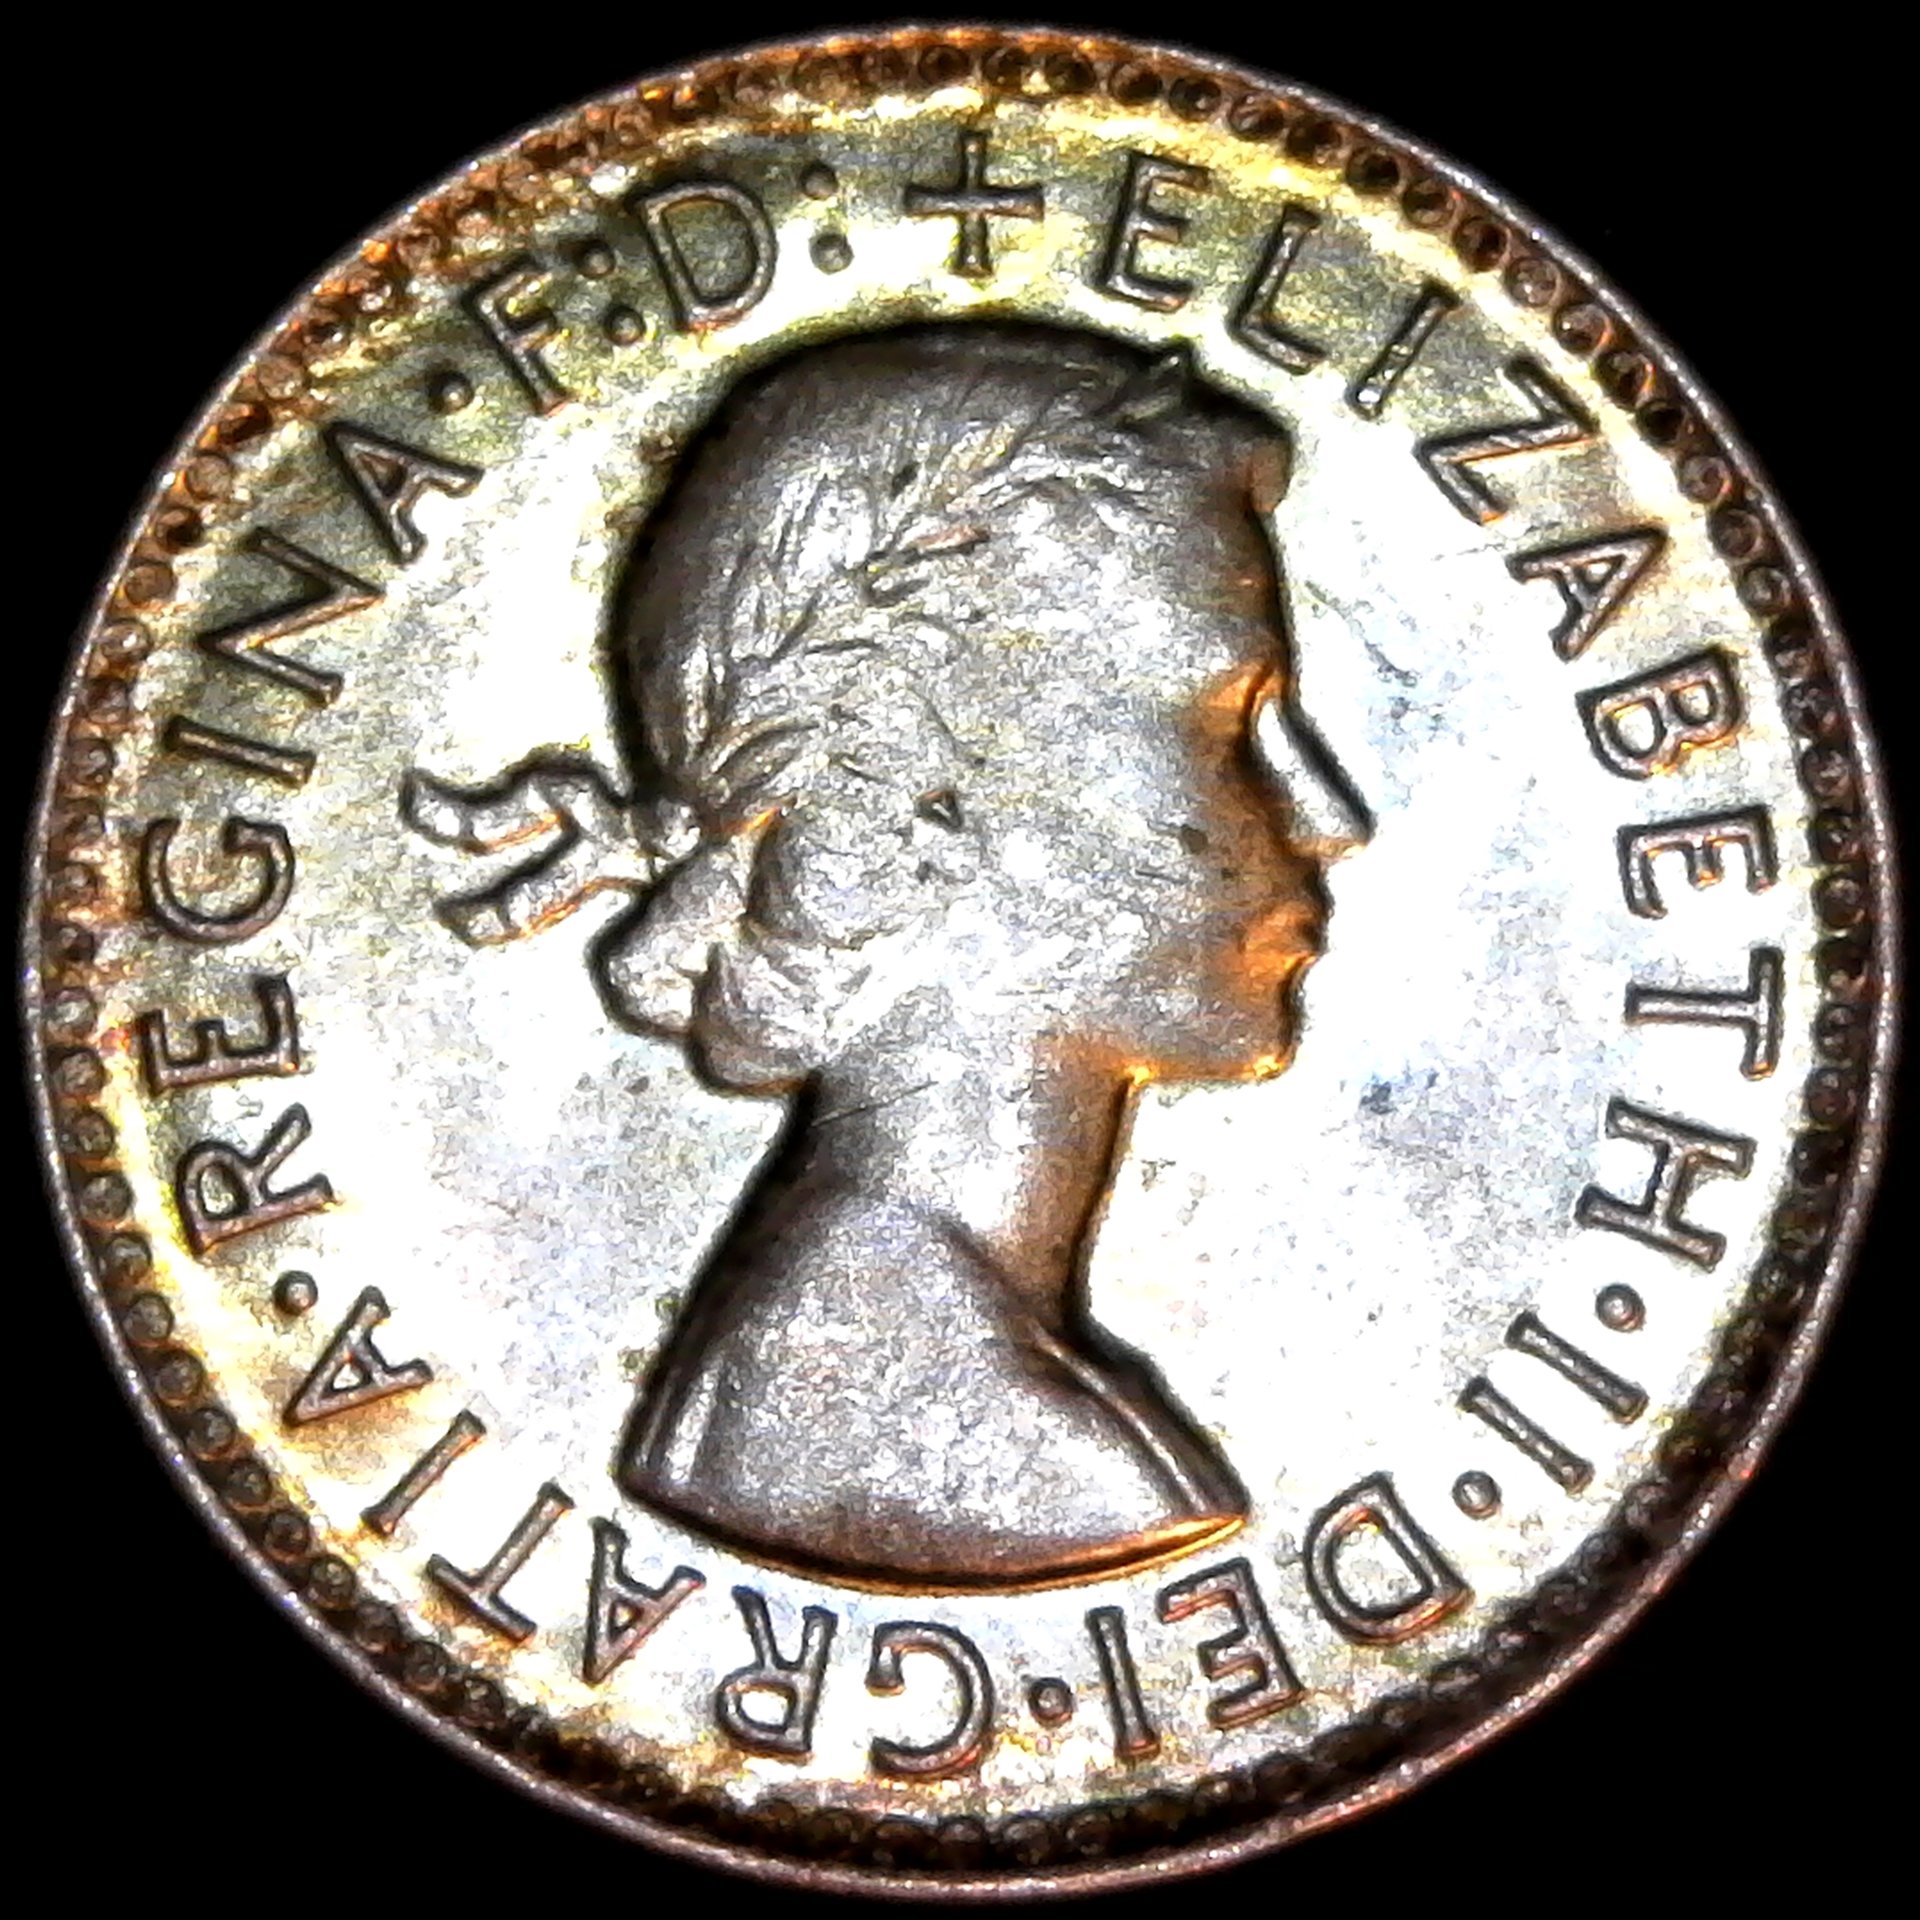 Australia Three pence 1964 obv.jpg